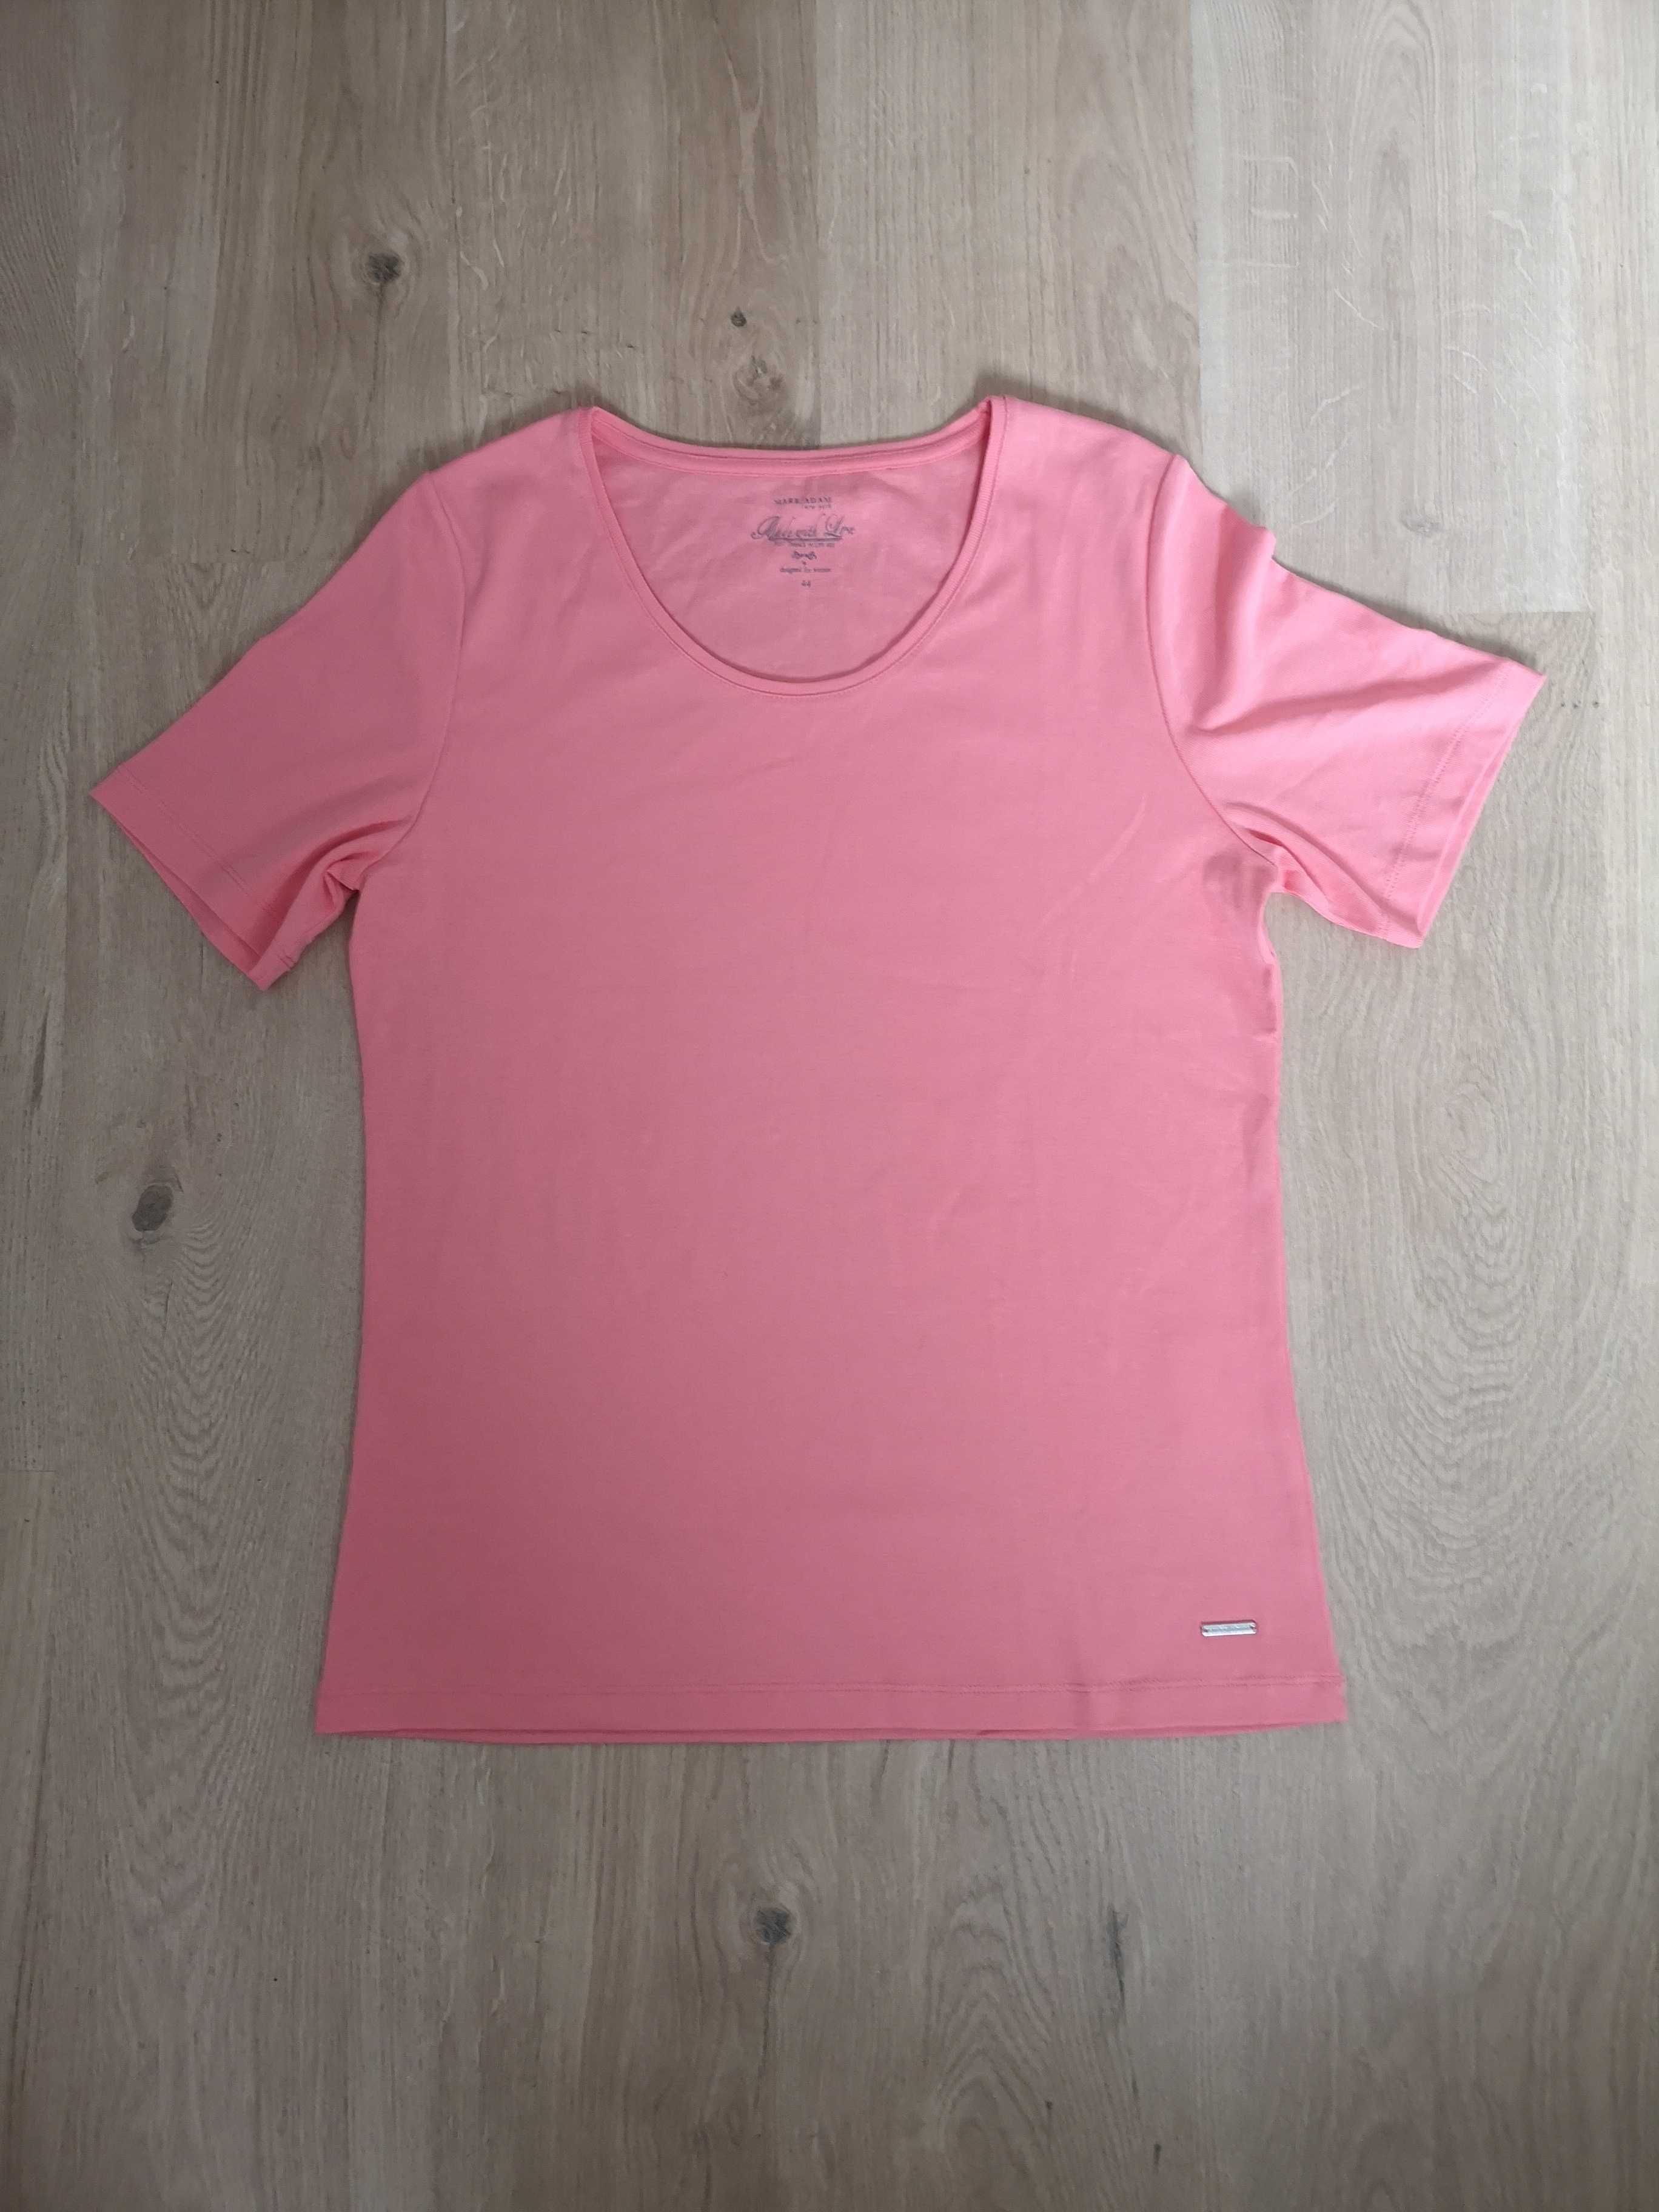 Mark Adam New York różowy łososiowy t-shirt r. 44